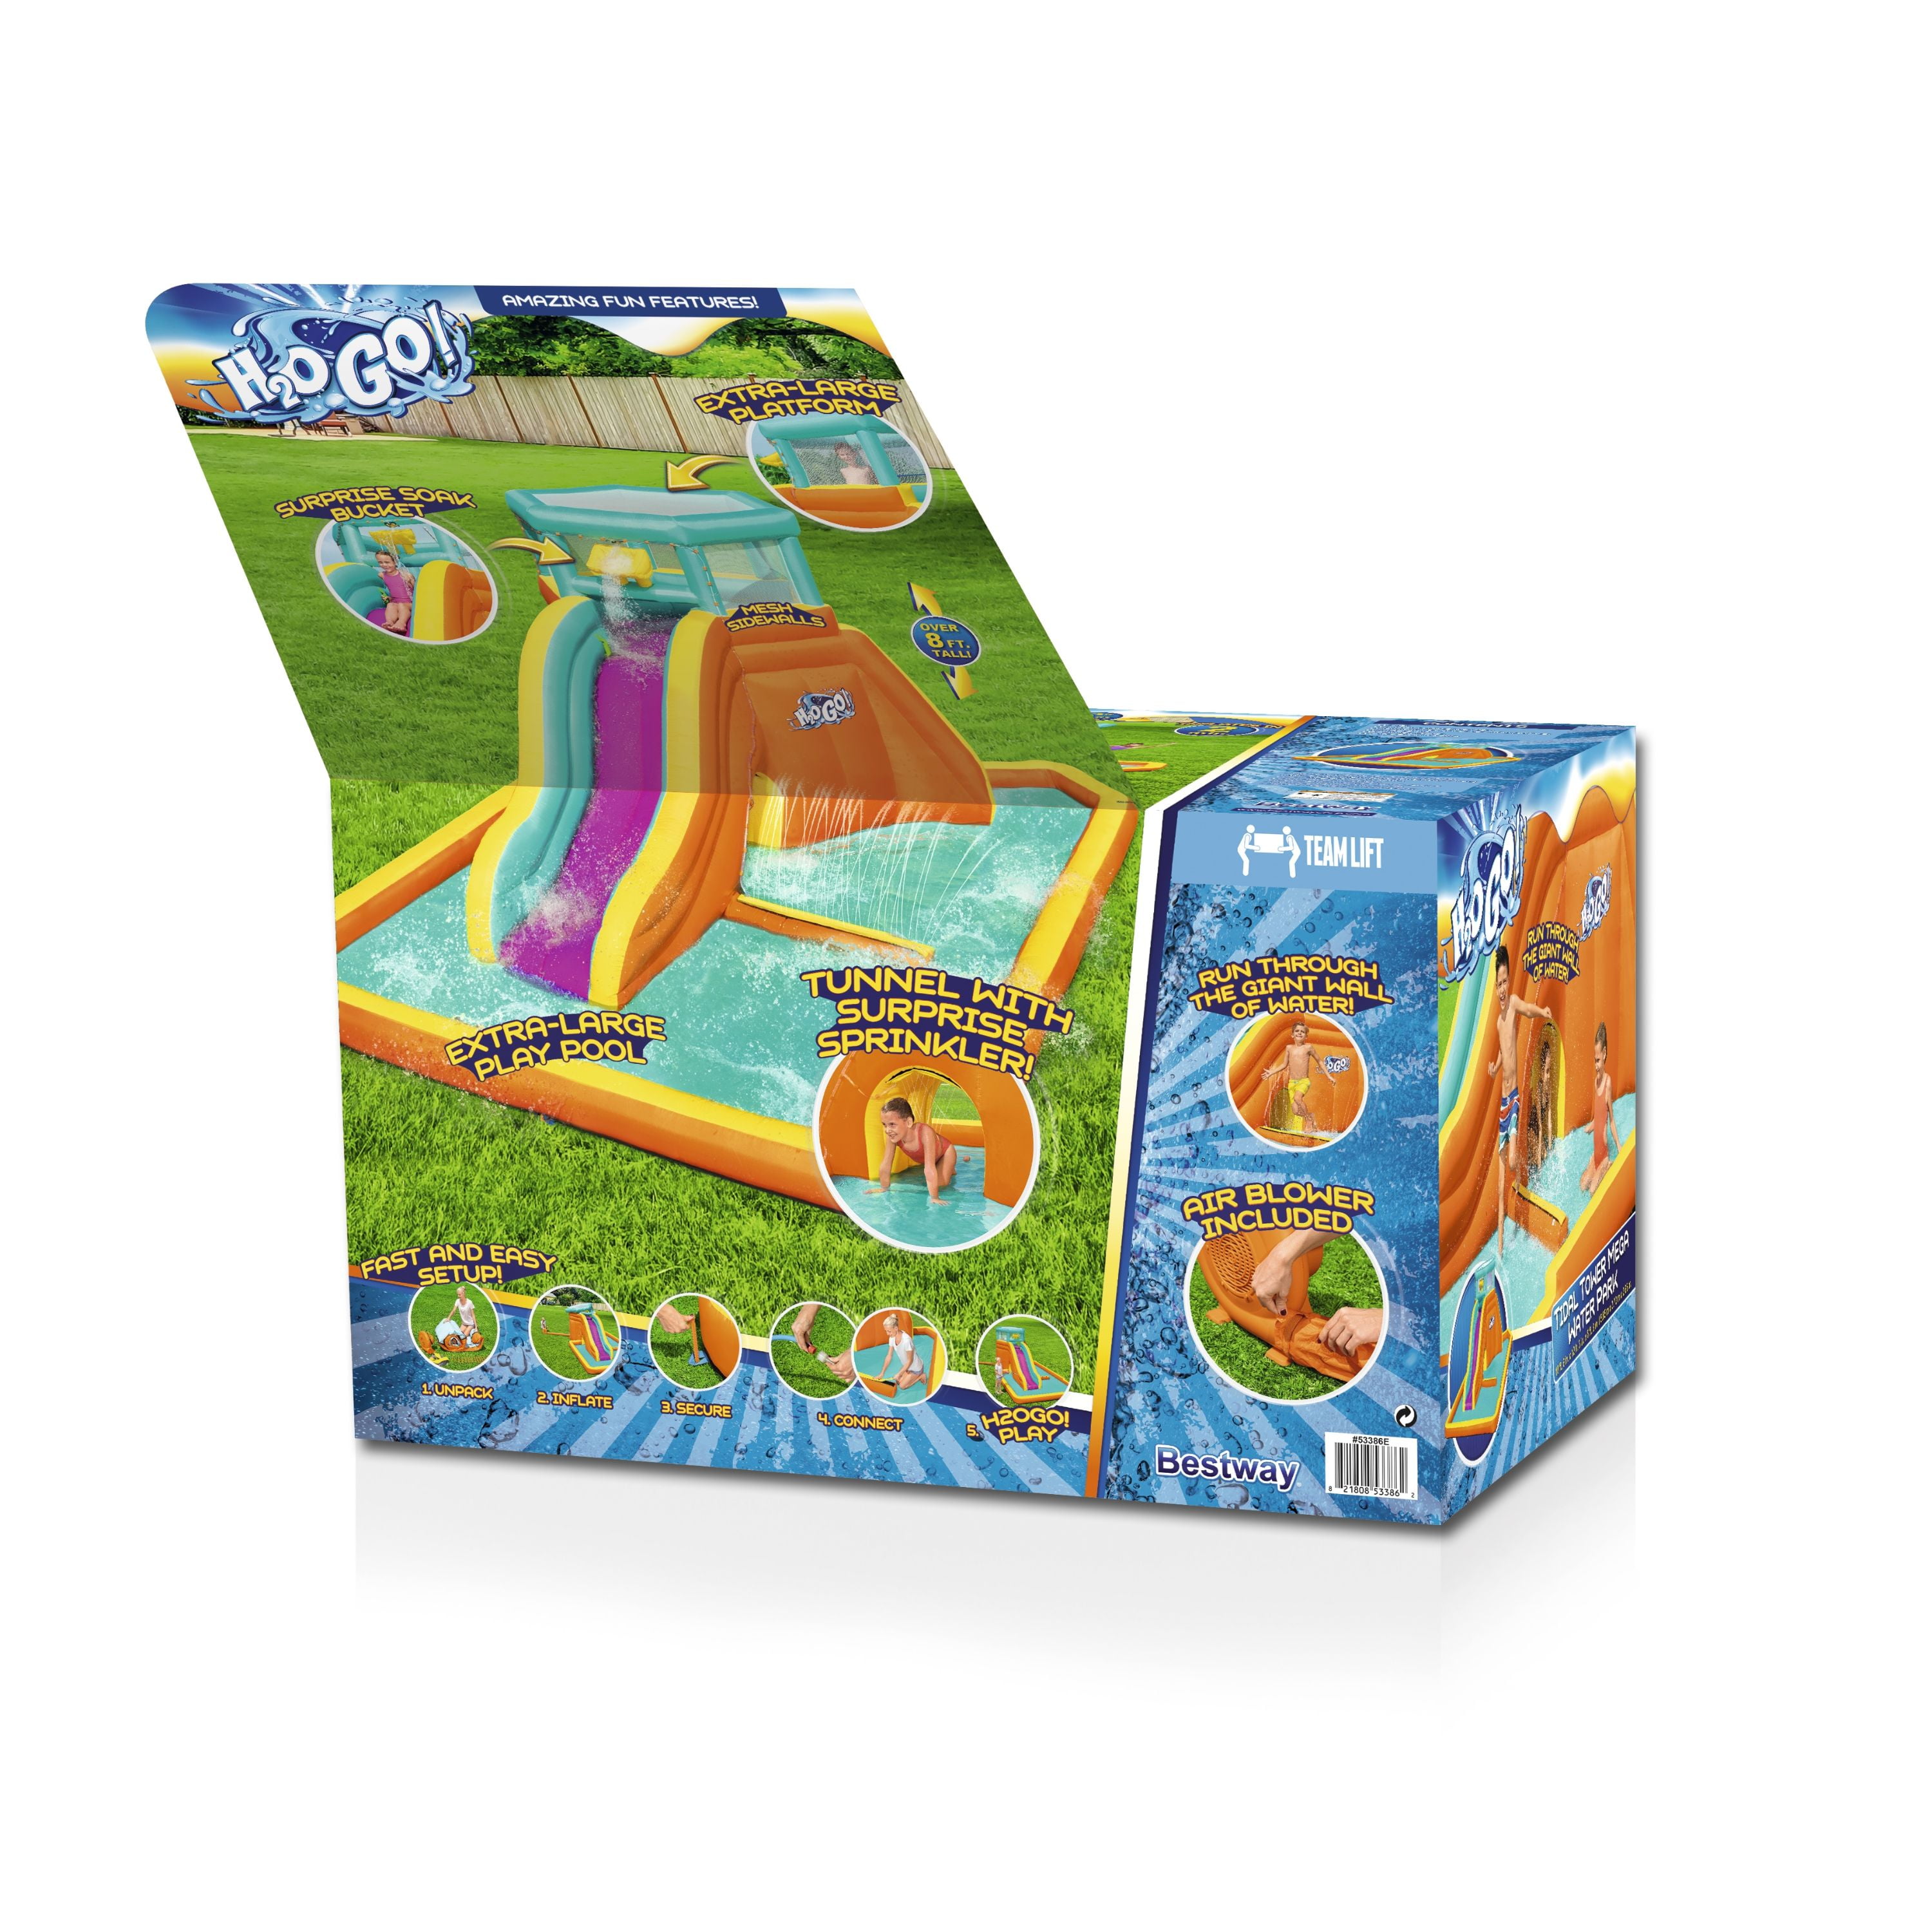 Bestway - H2OGO! 8’8” Tidal Tower Kids Inflatable Water Park